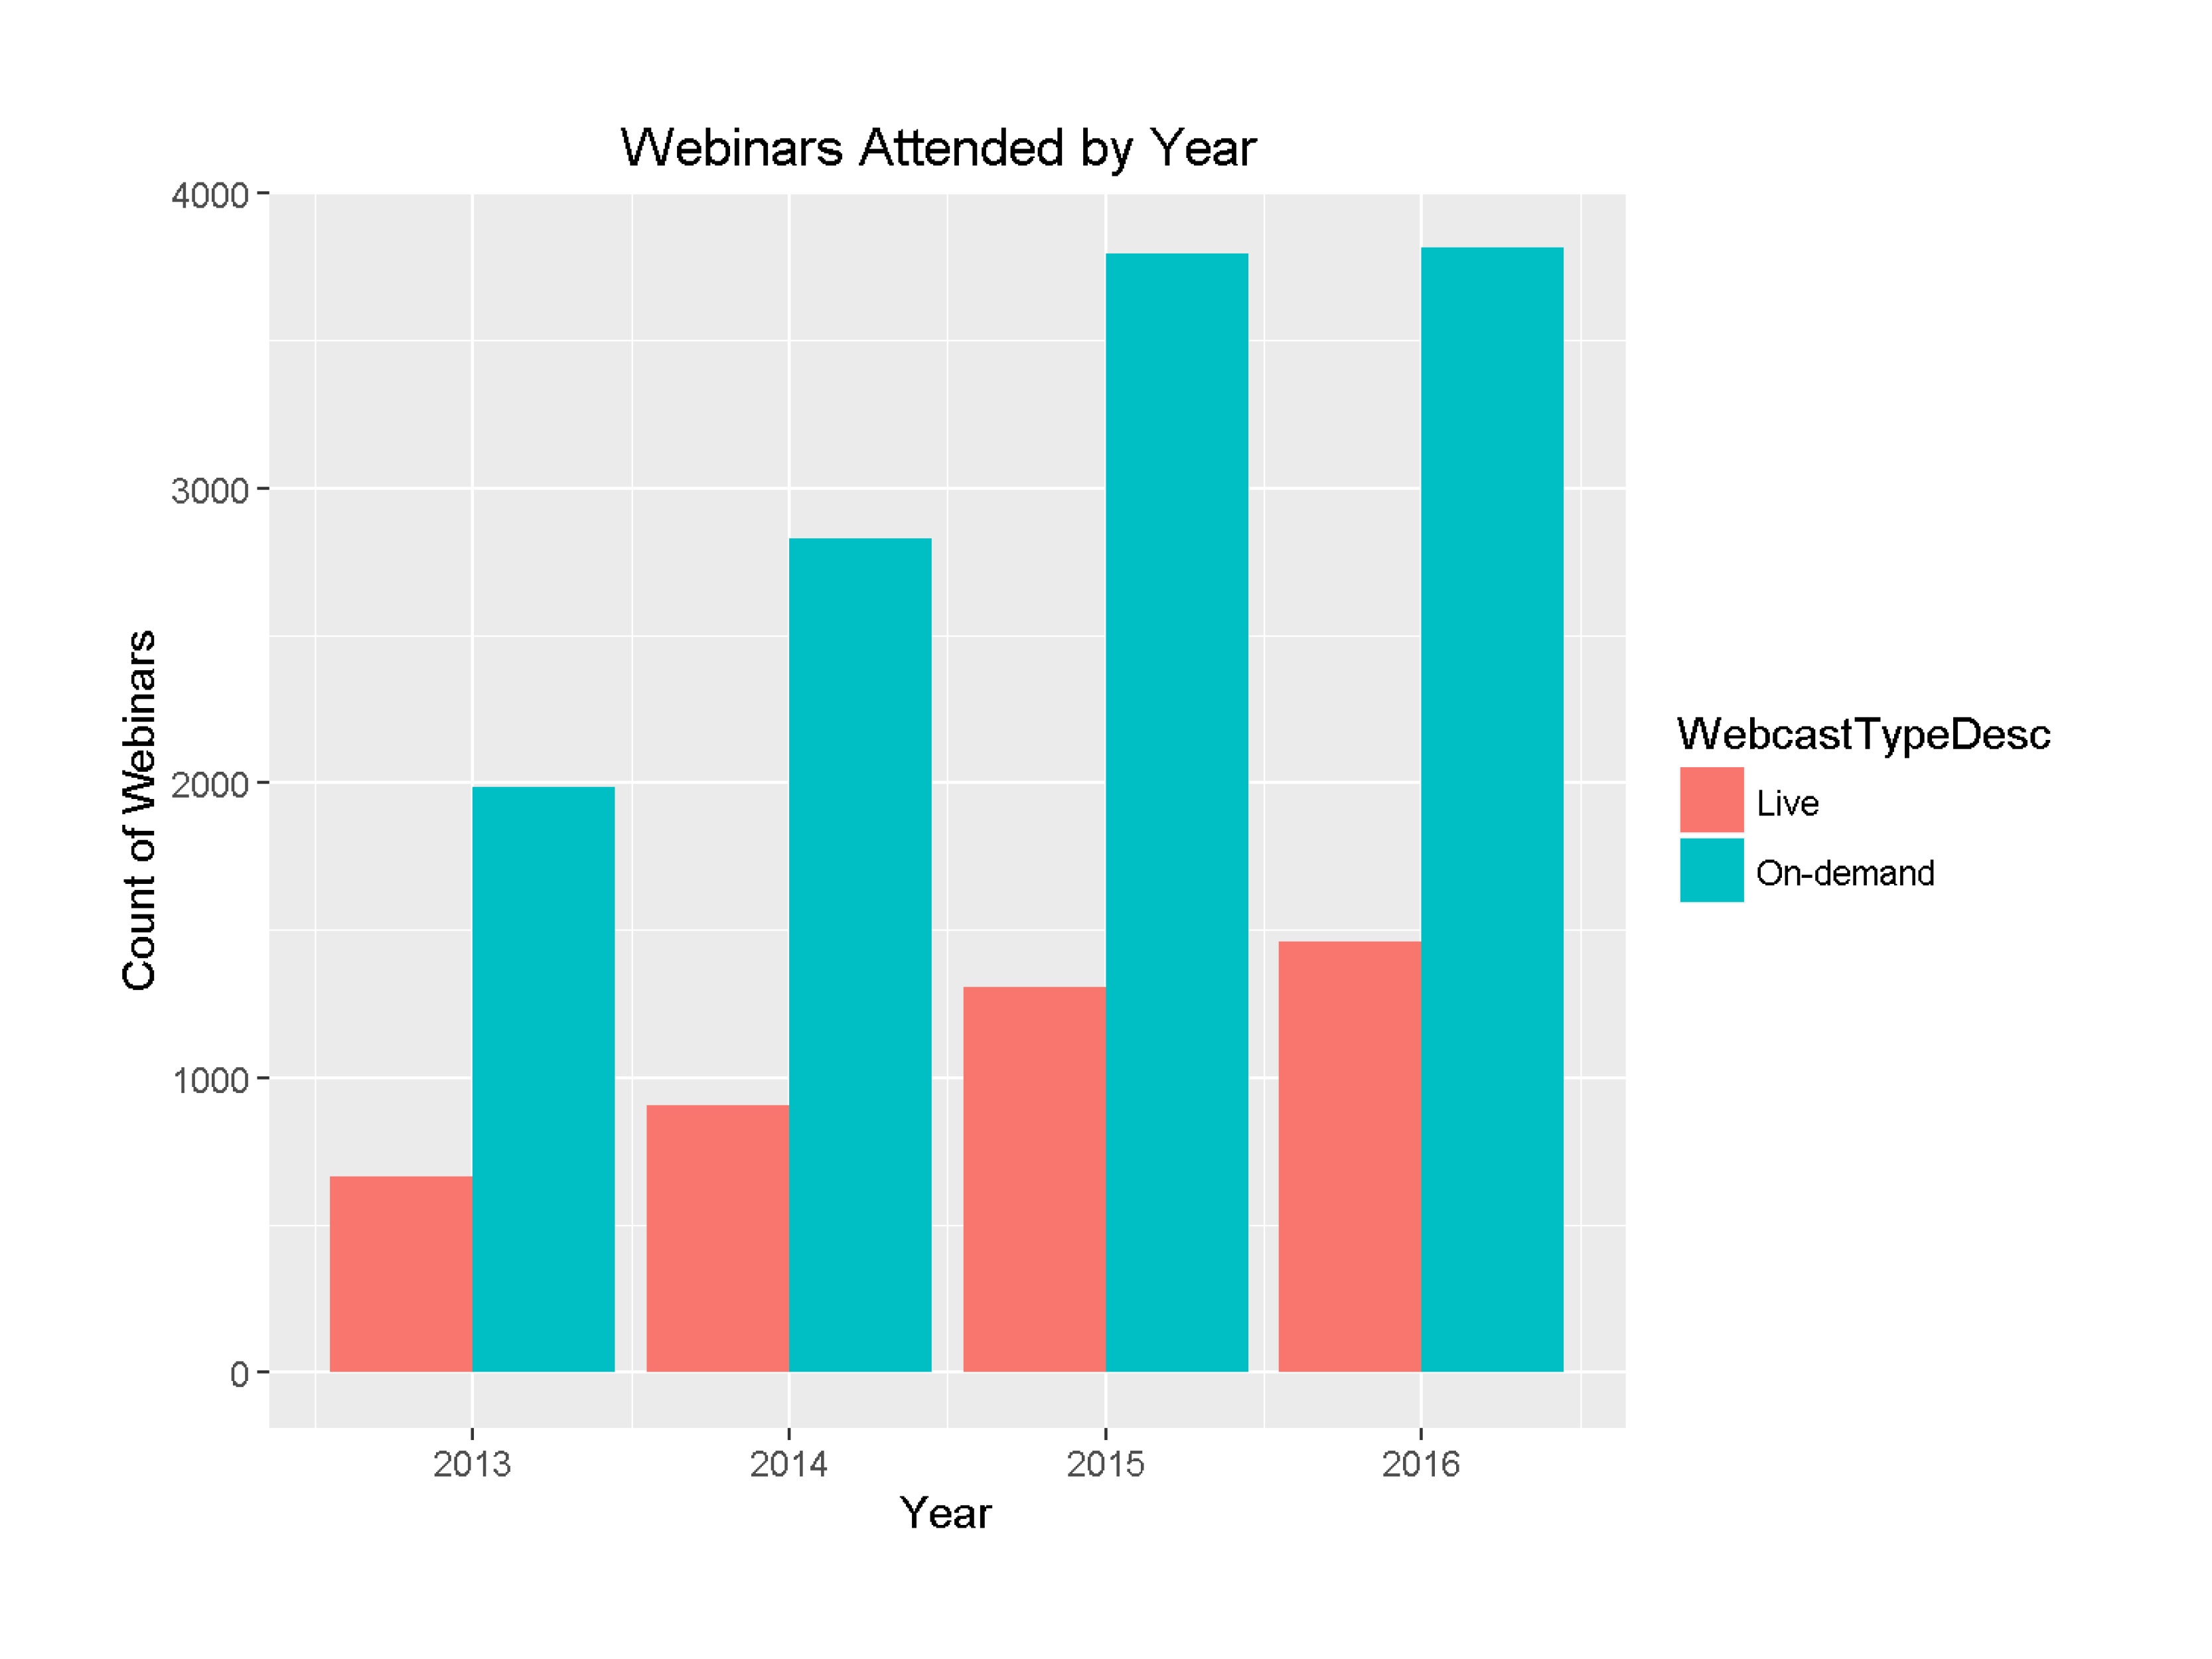 Webinars attended year on year